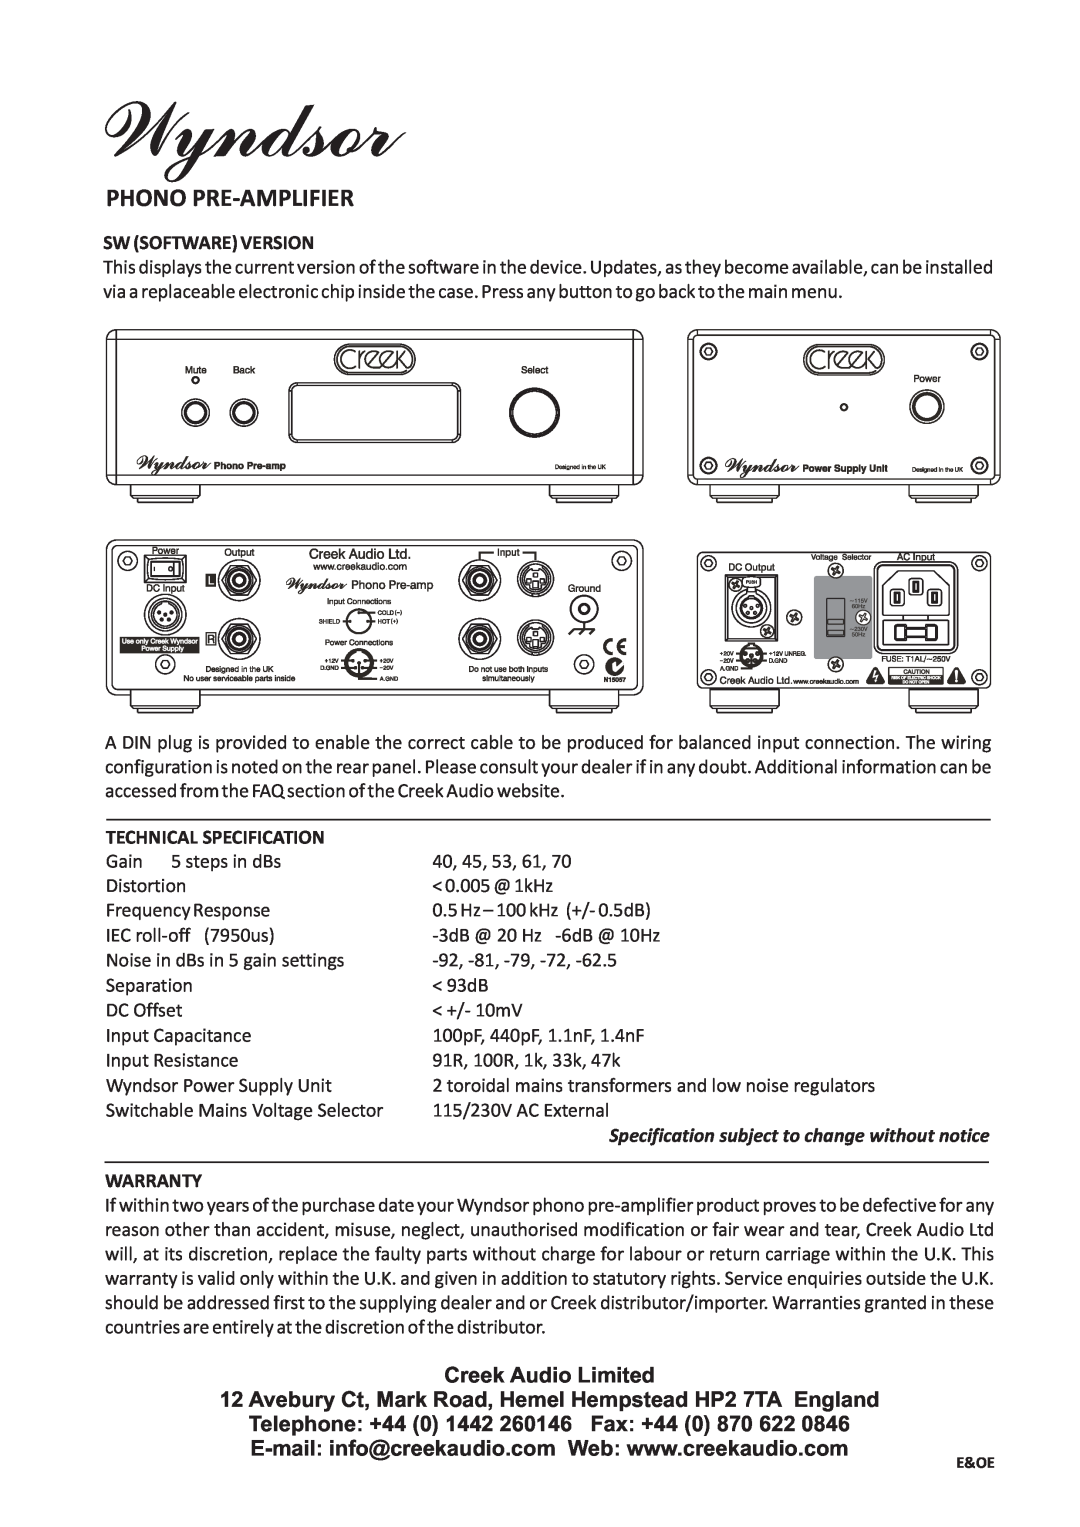 Creek Audio Wyndsor Sw Software Version, Technical Specification, Warranty, Phono Pre-Amplifier, Creek Audio Limited 